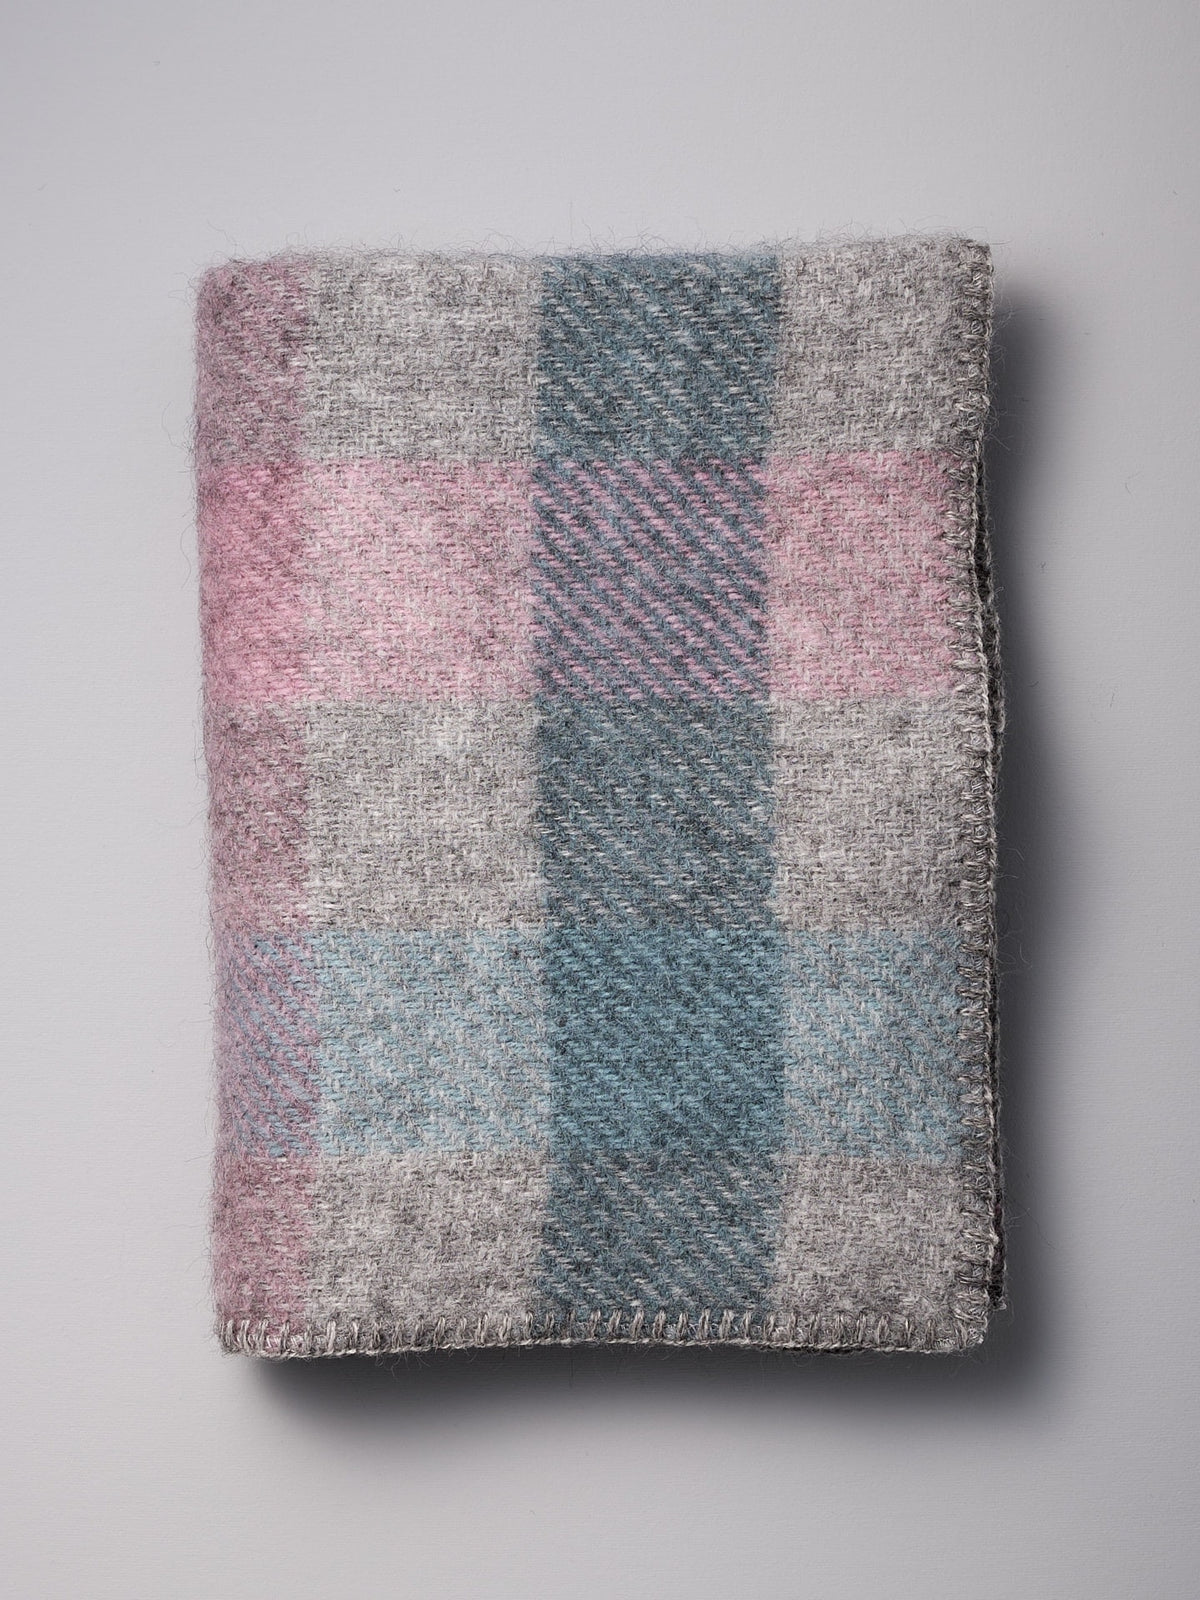 A Klippan Gotland Wool Baby Throw – Multi Pastel blanket on a white surface.